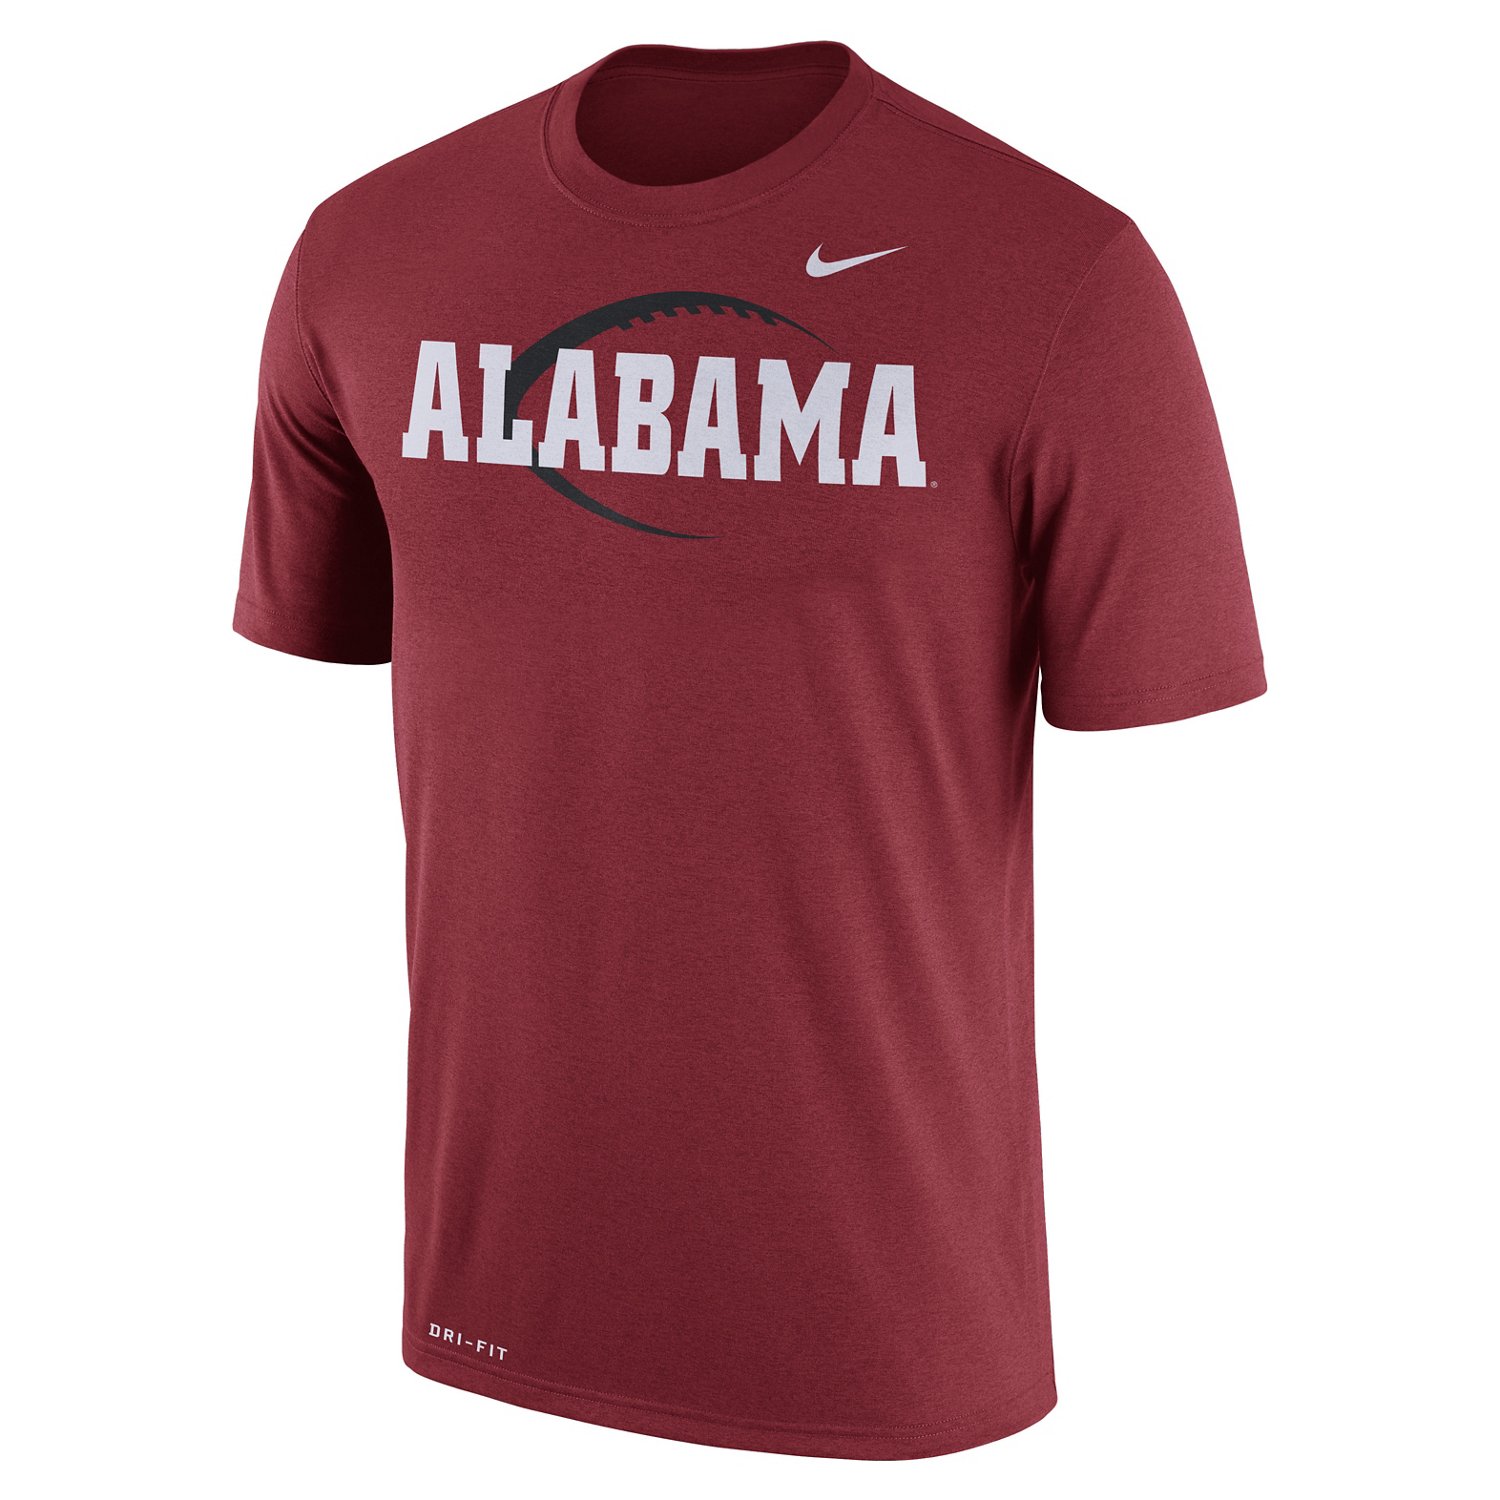 Alabama Crimson Tide Clothing | Academy